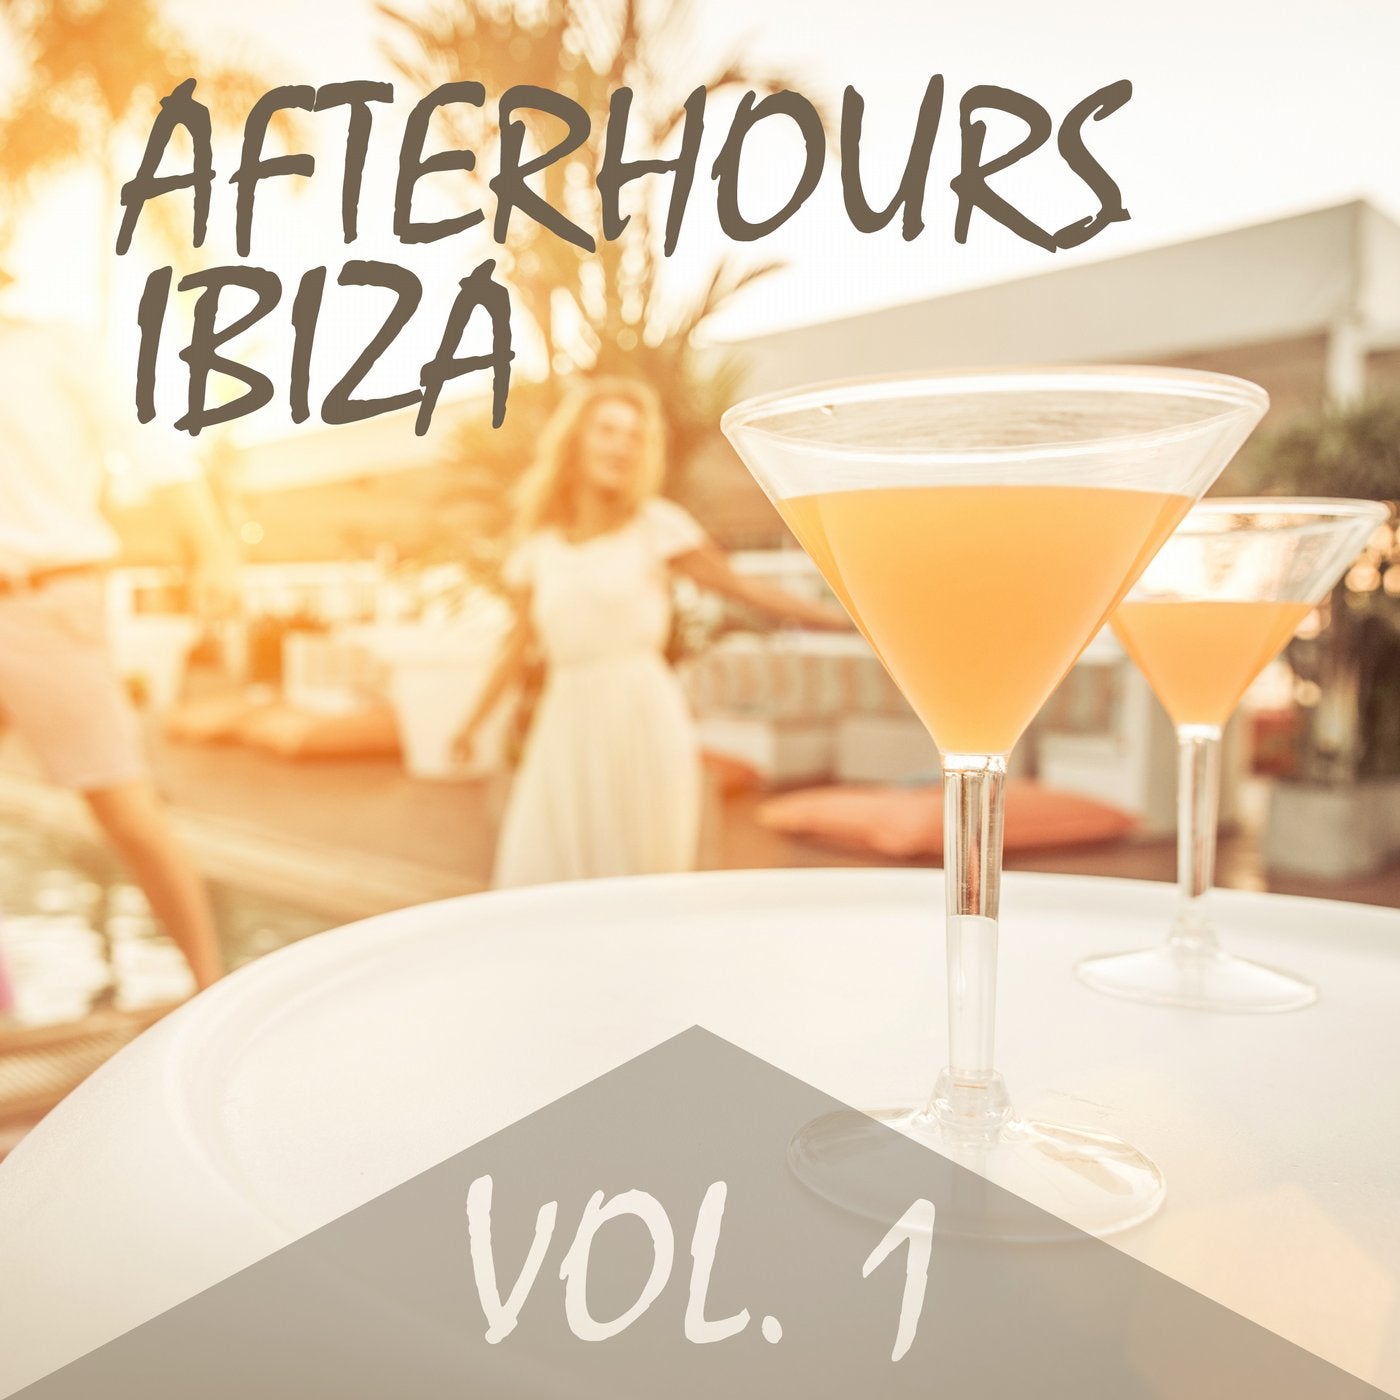 Afterhours Ibiza, Vol. 1